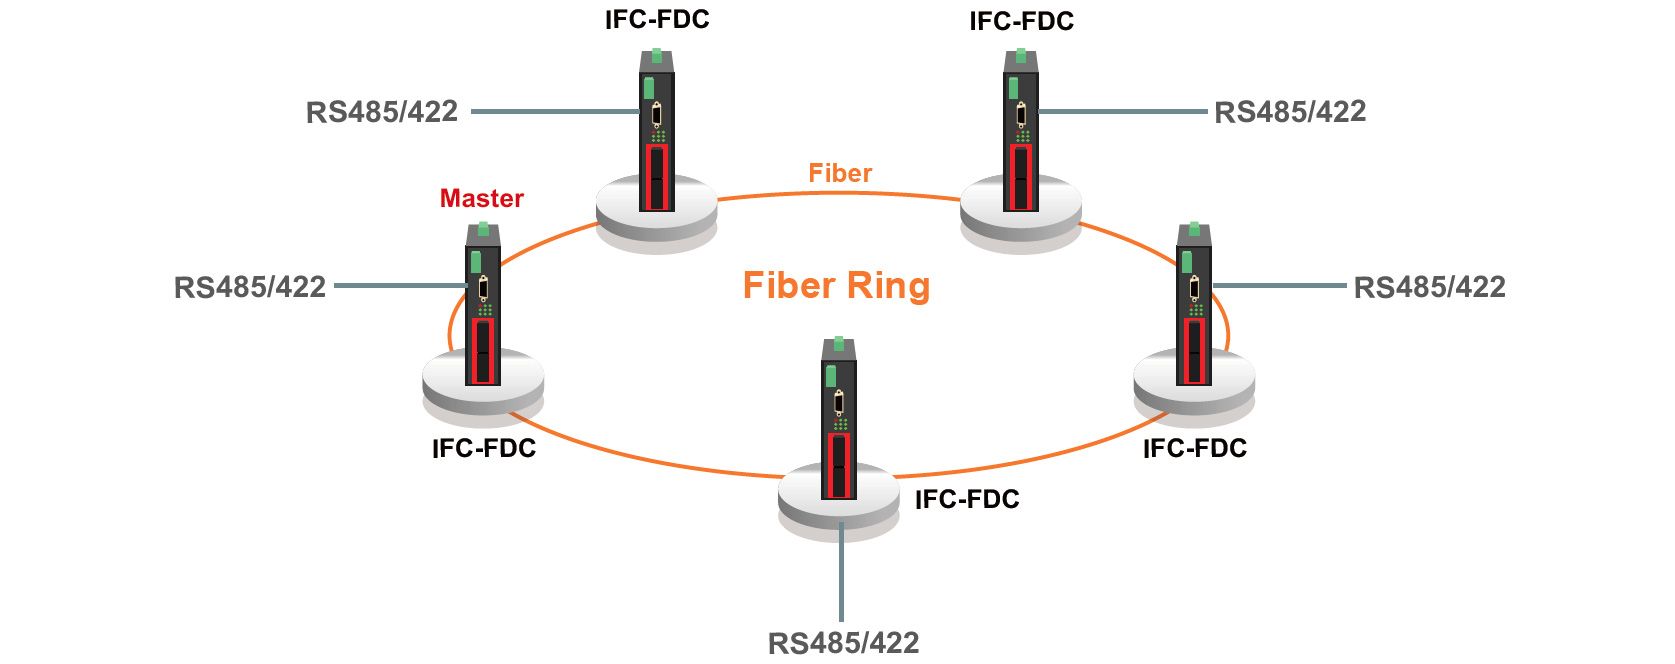 IFC-FDC Fiber Ring Redundancy topology & application